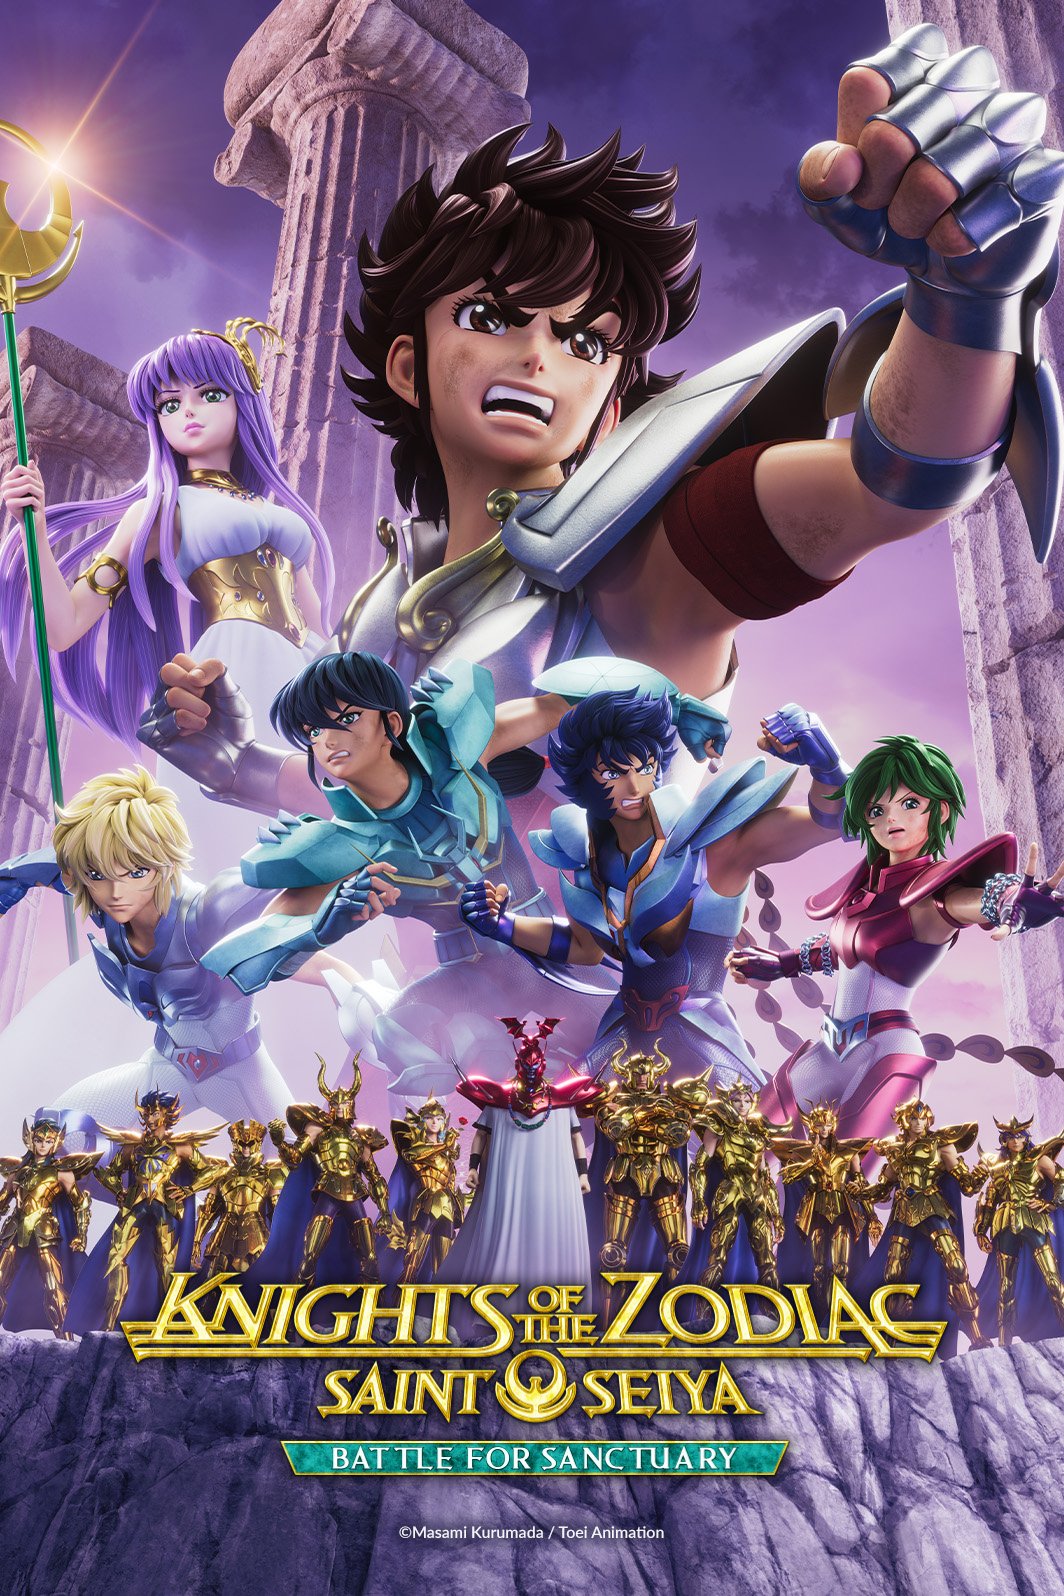 Todos Episódios de Os Cavaleiros do Zodíaco Dublado - Animes Online